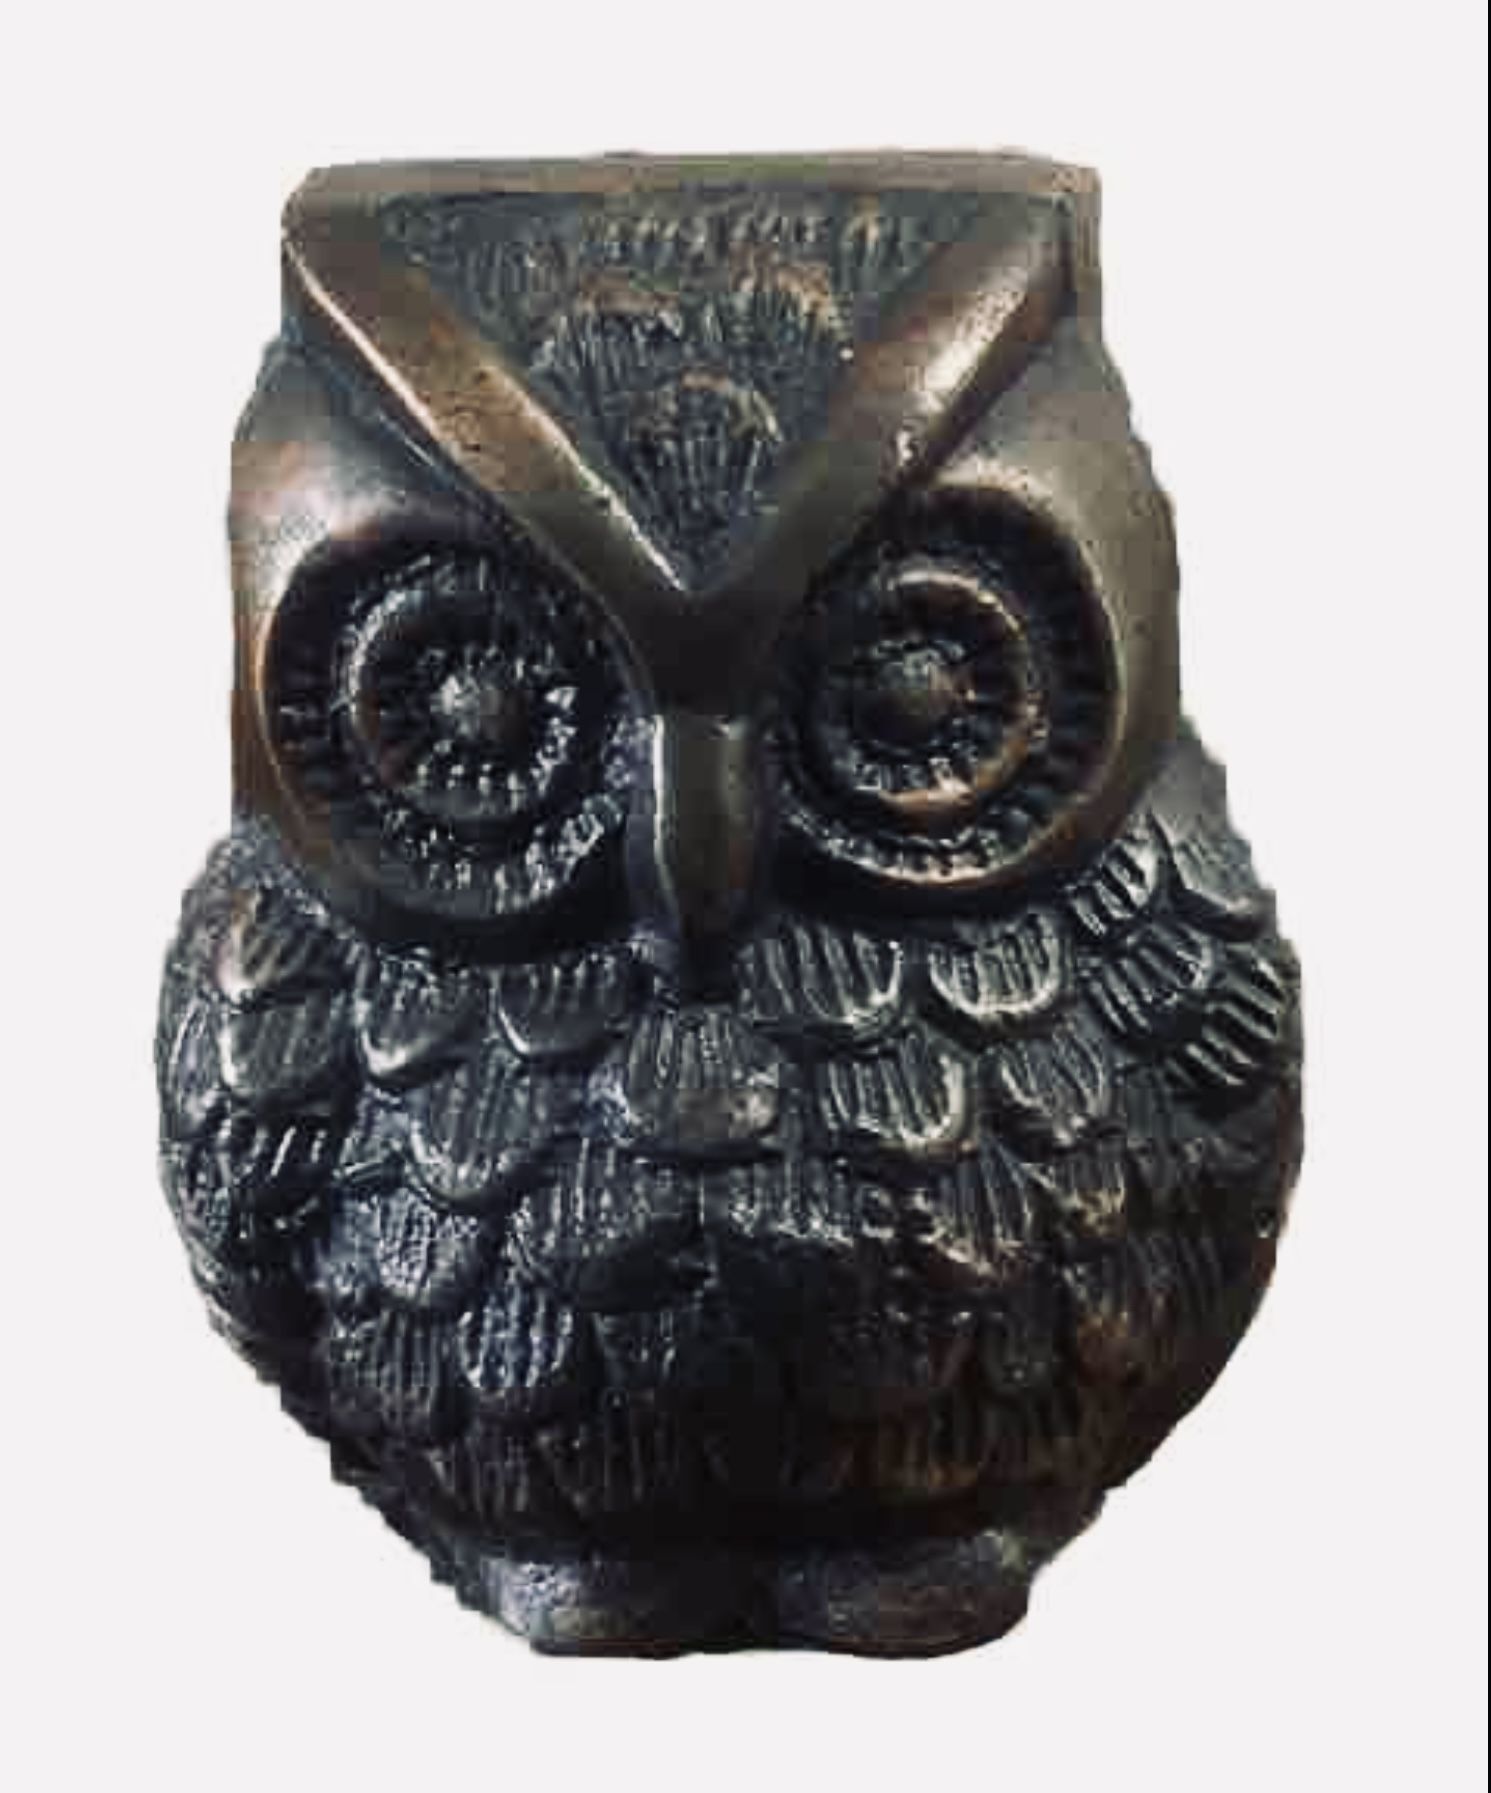  Vintage Owl Figurine Paperweight Bronze Owl 4” - Paperweight Heavy Est 1.75 Lbs